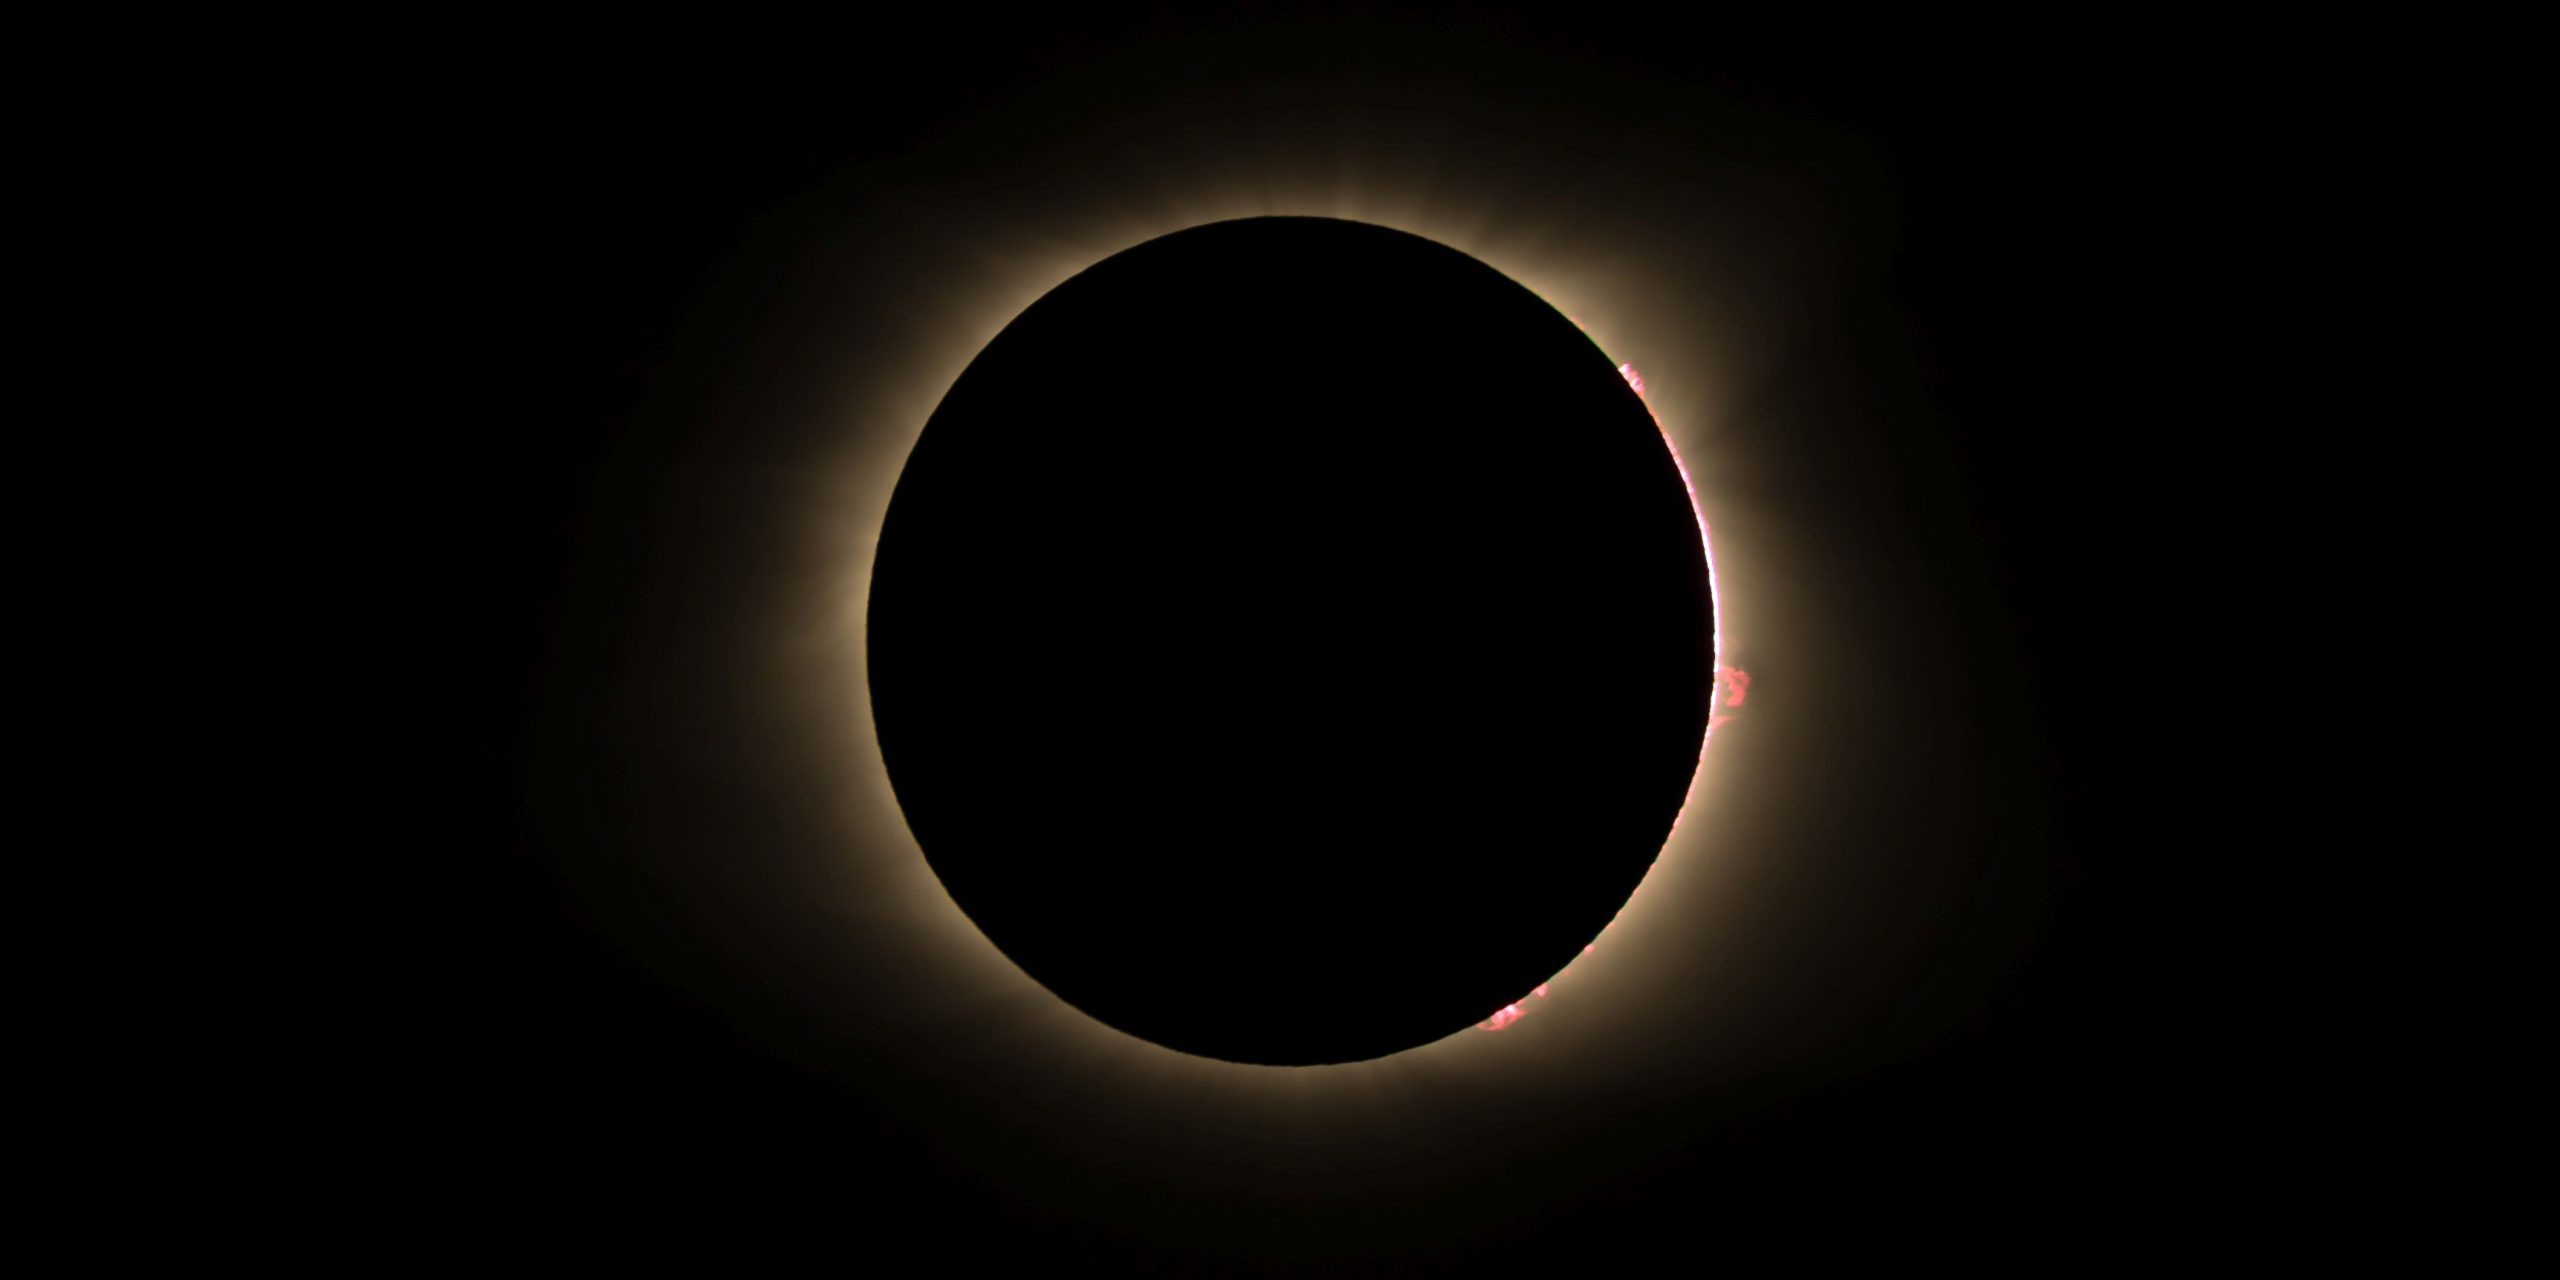 EclipEclipse op 21 augustus 2017 US, South Carolina, Cross Hill bij Clinton (Foto: Jozef Van Giel)